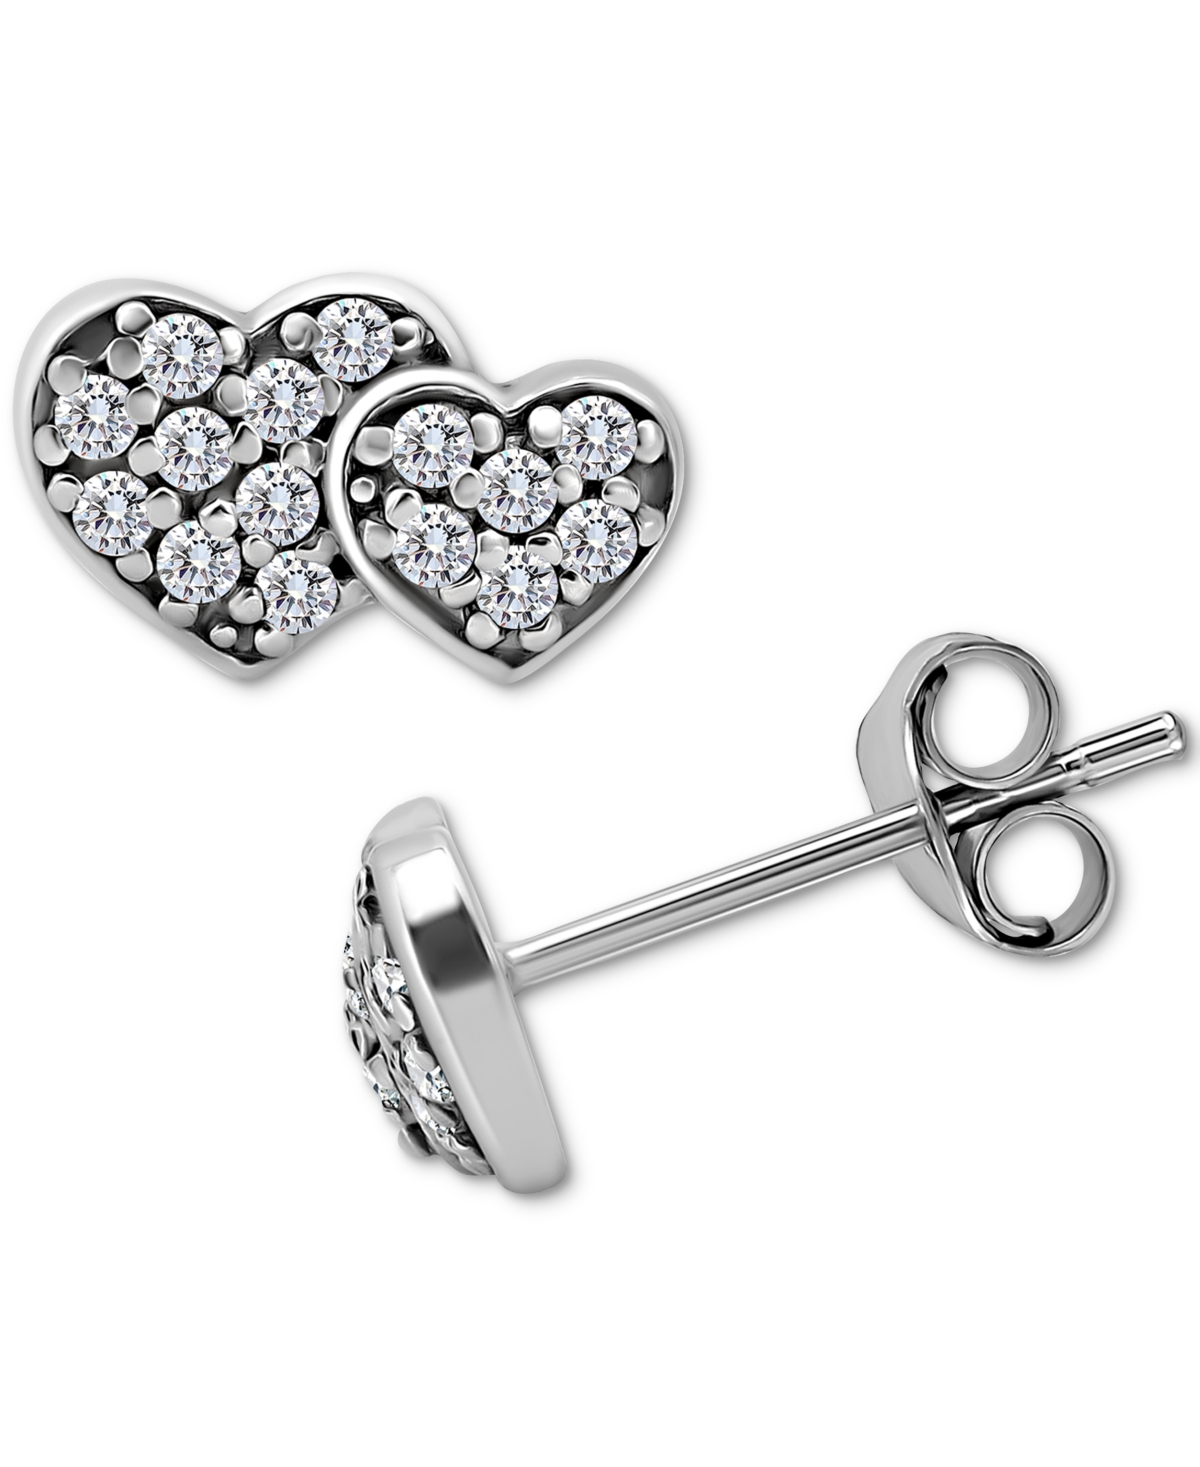 Giani Bernini Cubic Zirconia Double Heart Stud Earrings In Sterling Silver, Created For Macy's